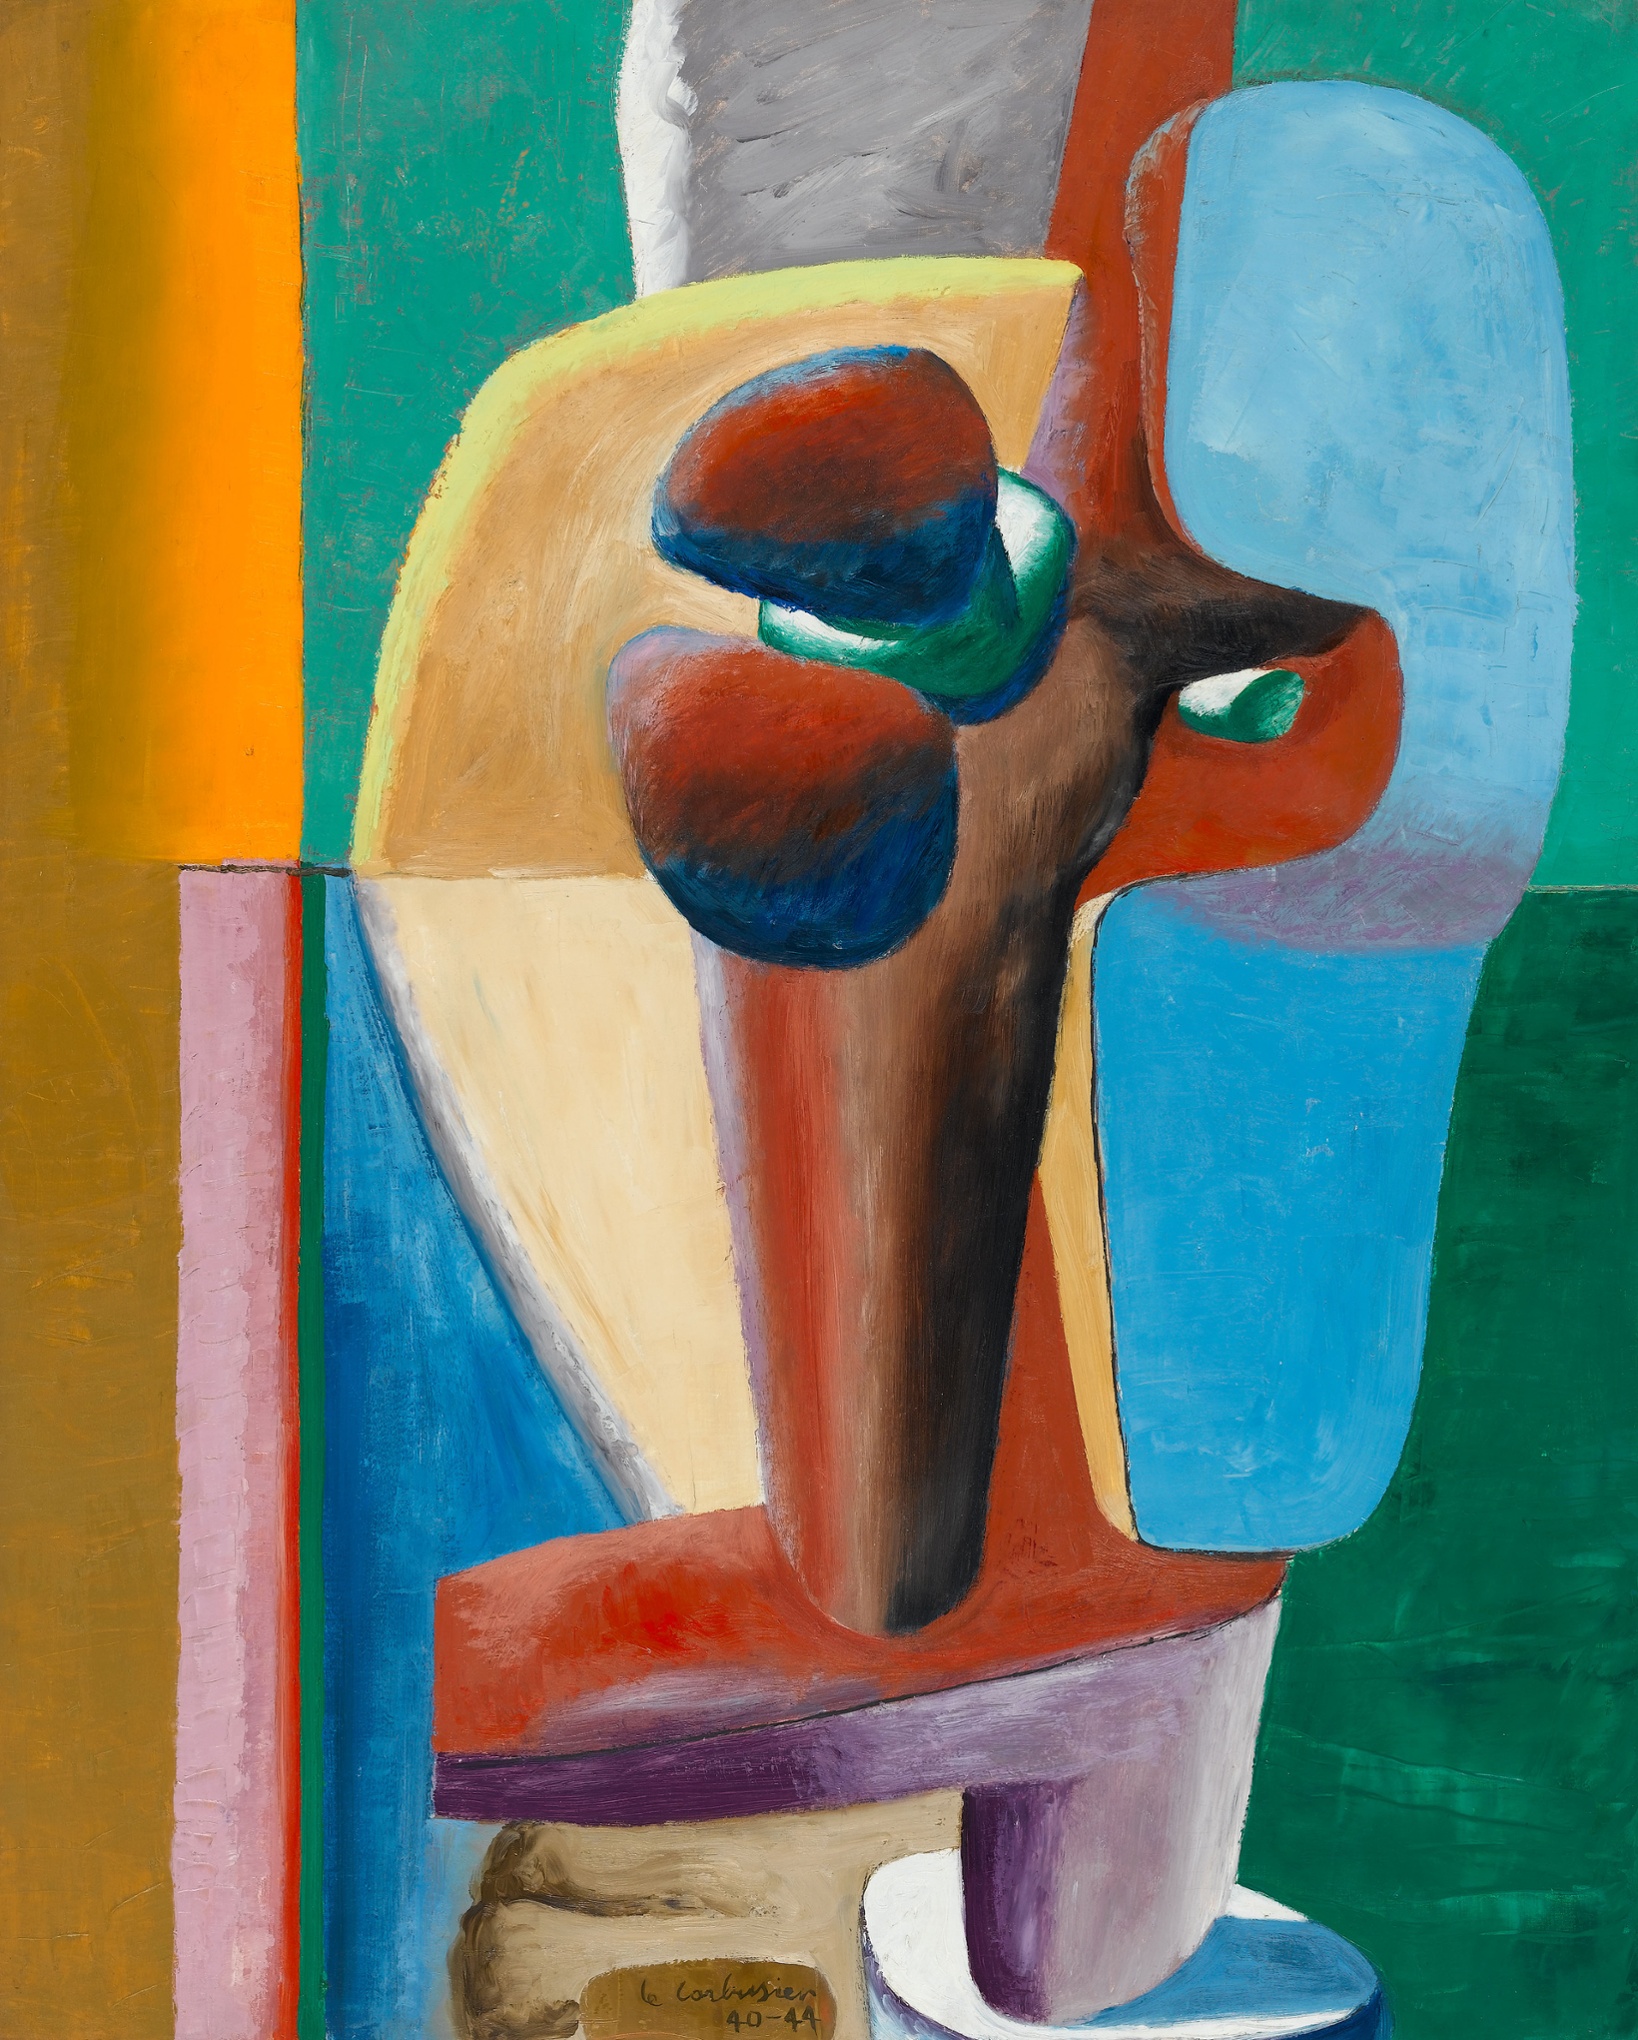 The Naked Charles-Édouard Jeanneret, AKA Le Corbusier: A 